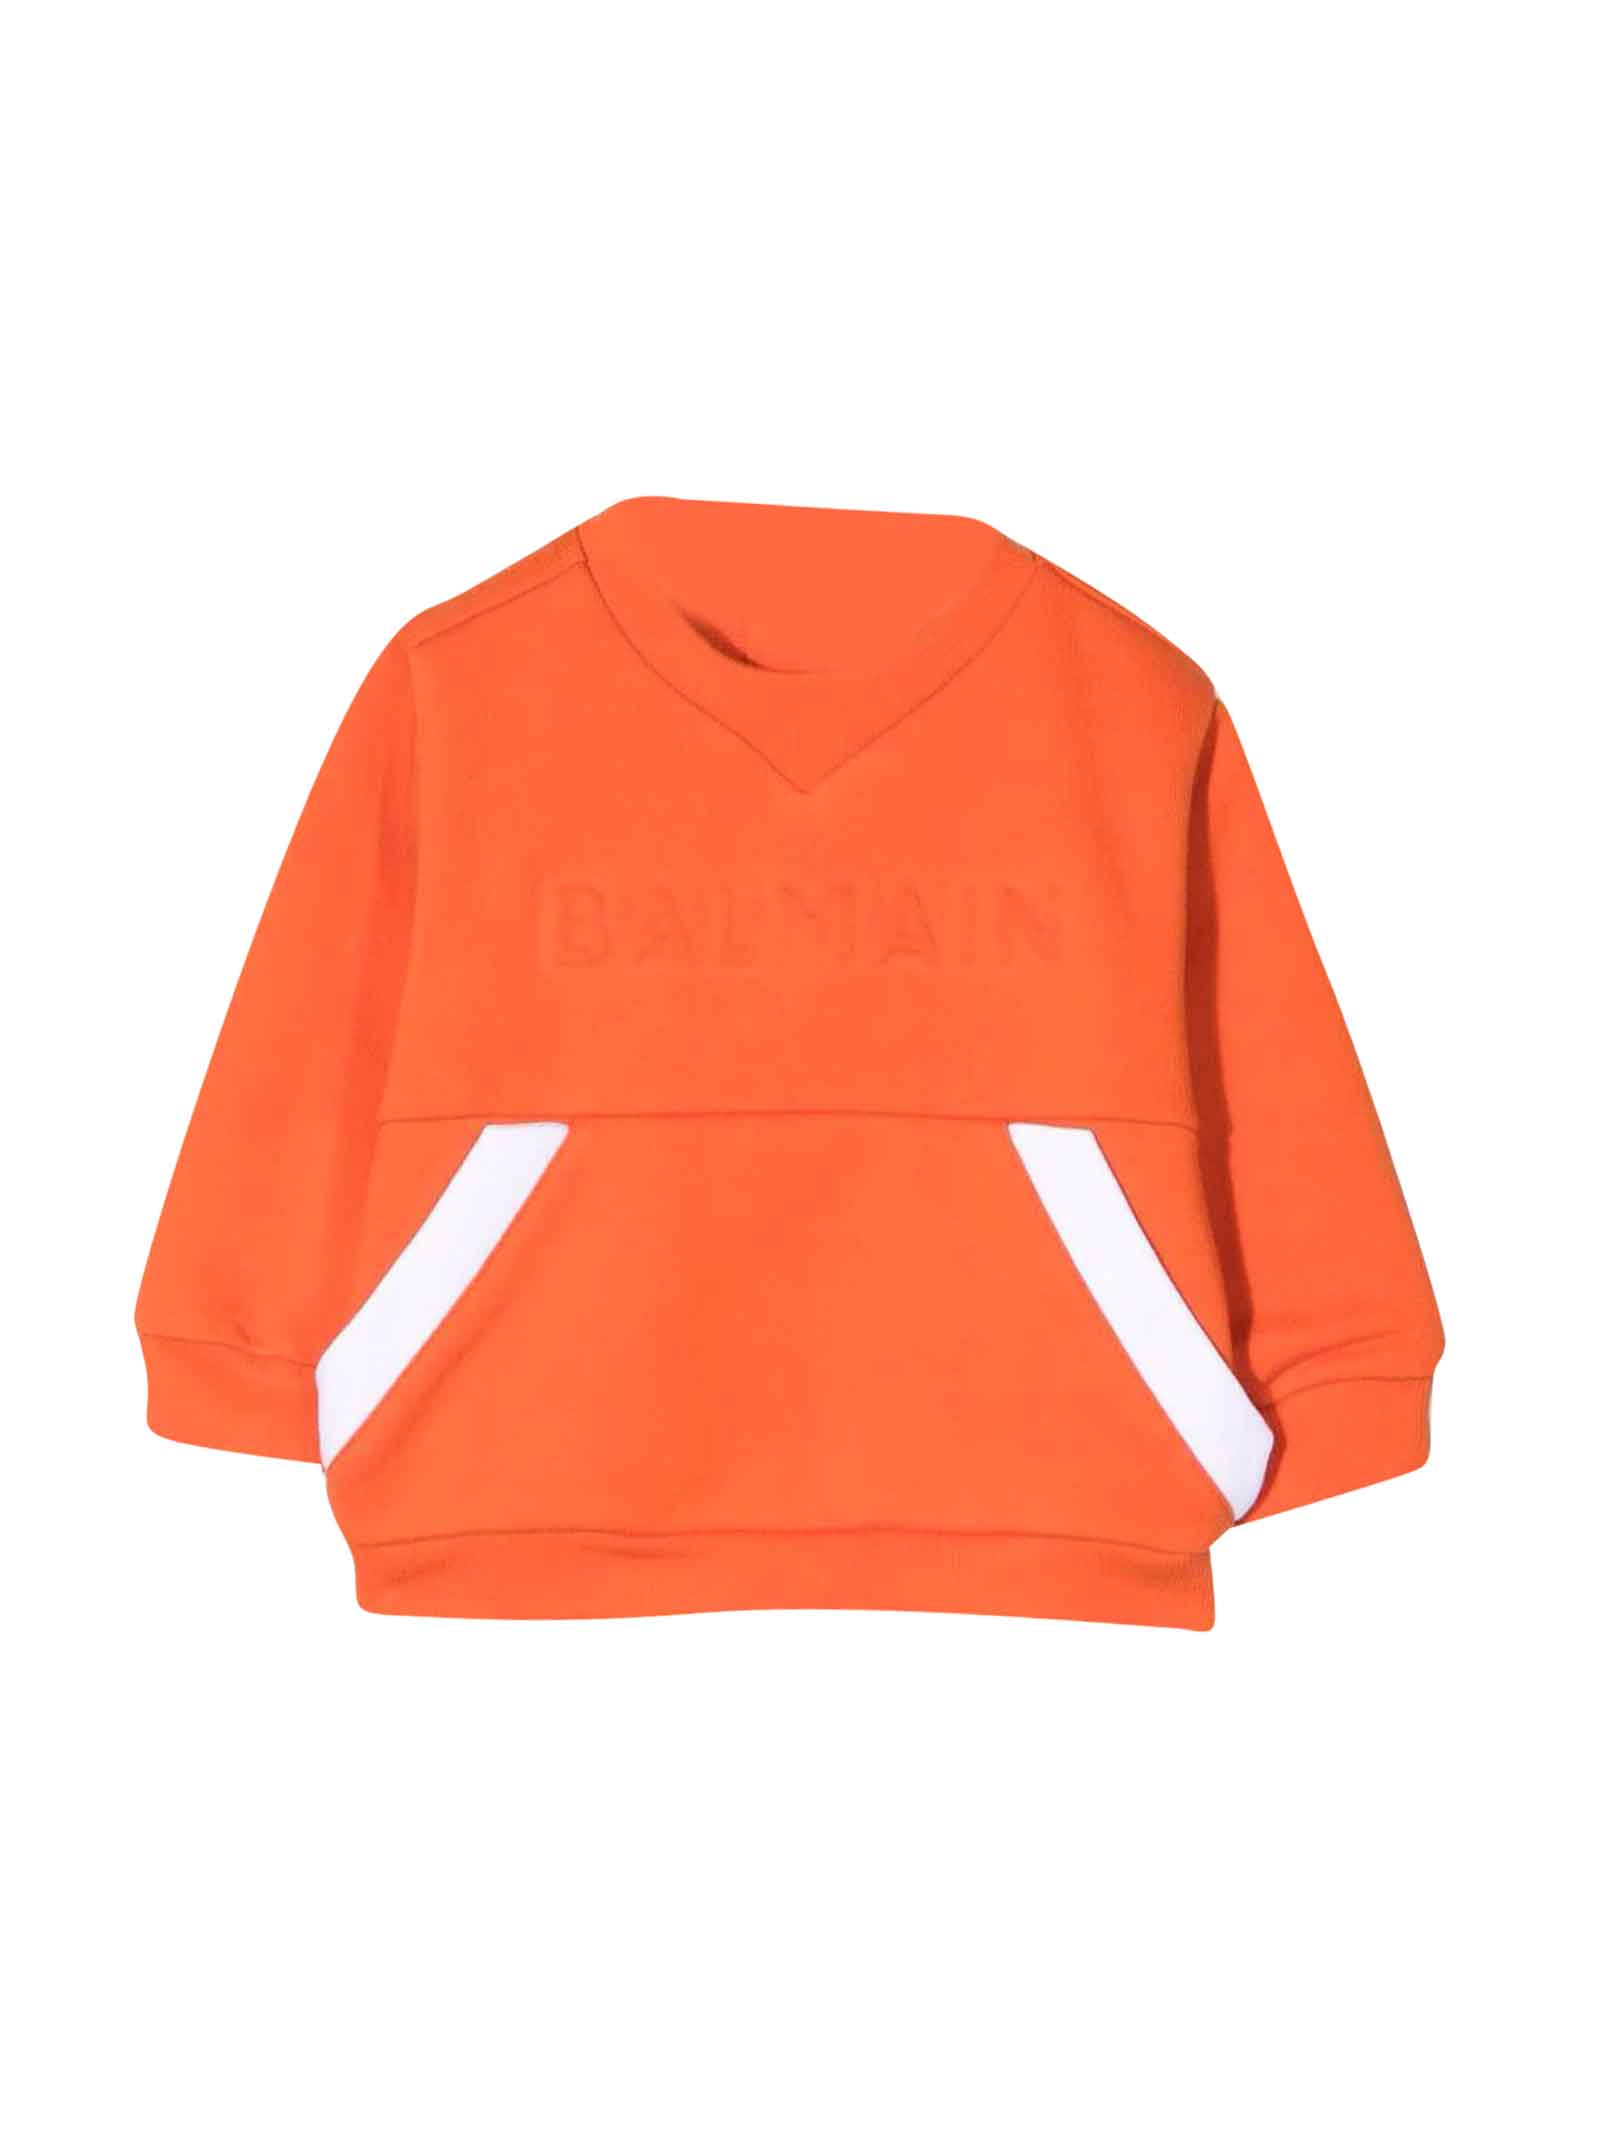 Balmain Orange Sweatshirt Baby Unisex